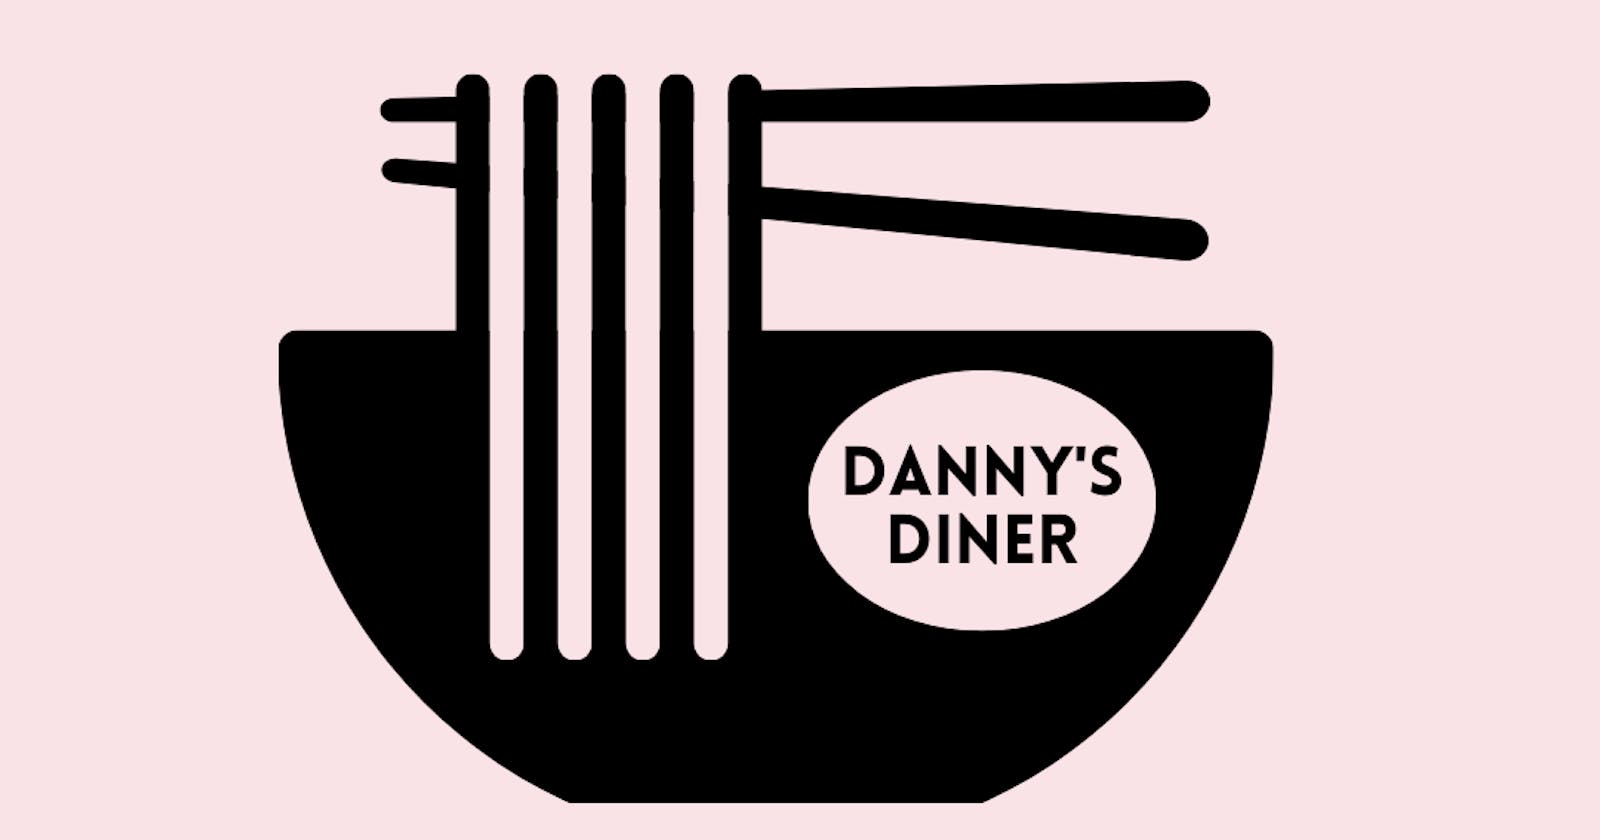 Problem solving with SQL: Case Study #1 - Danny's Diner